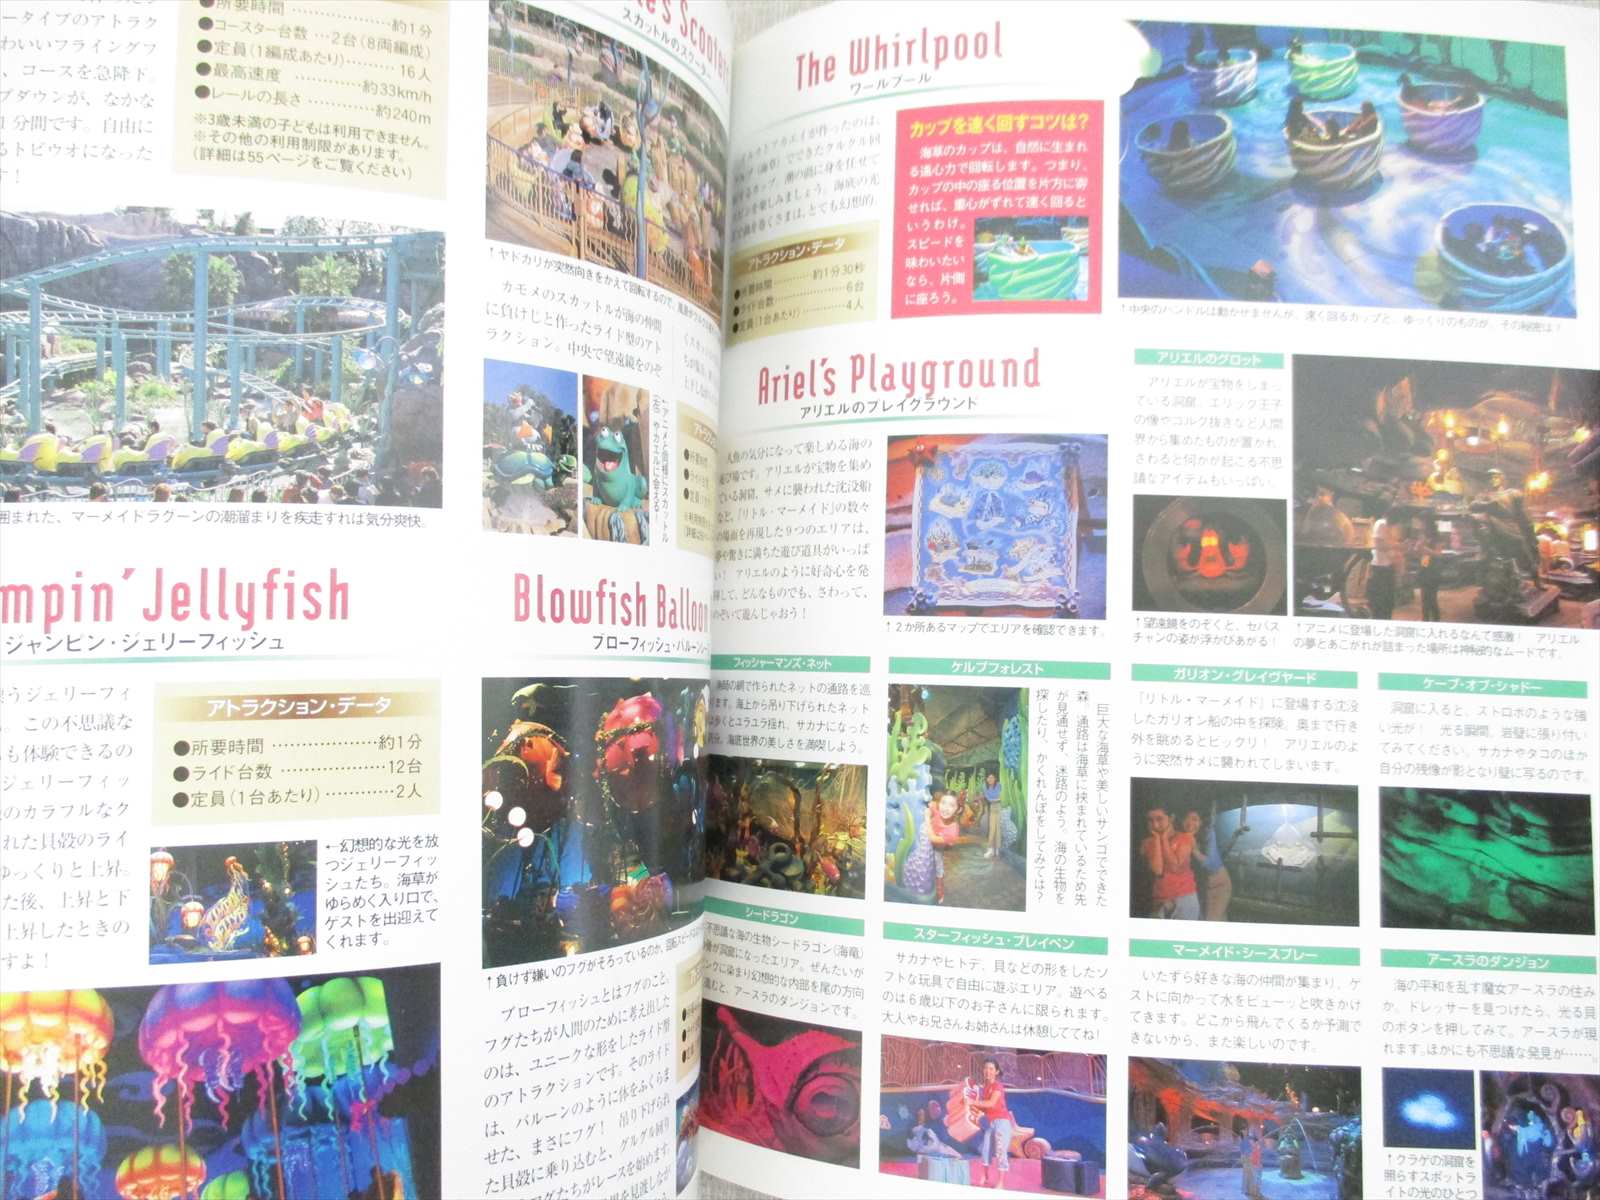 Tokyo Disneysea Attraction Guide Book 03 Art Japan Disney Resort Ko52 Ebay